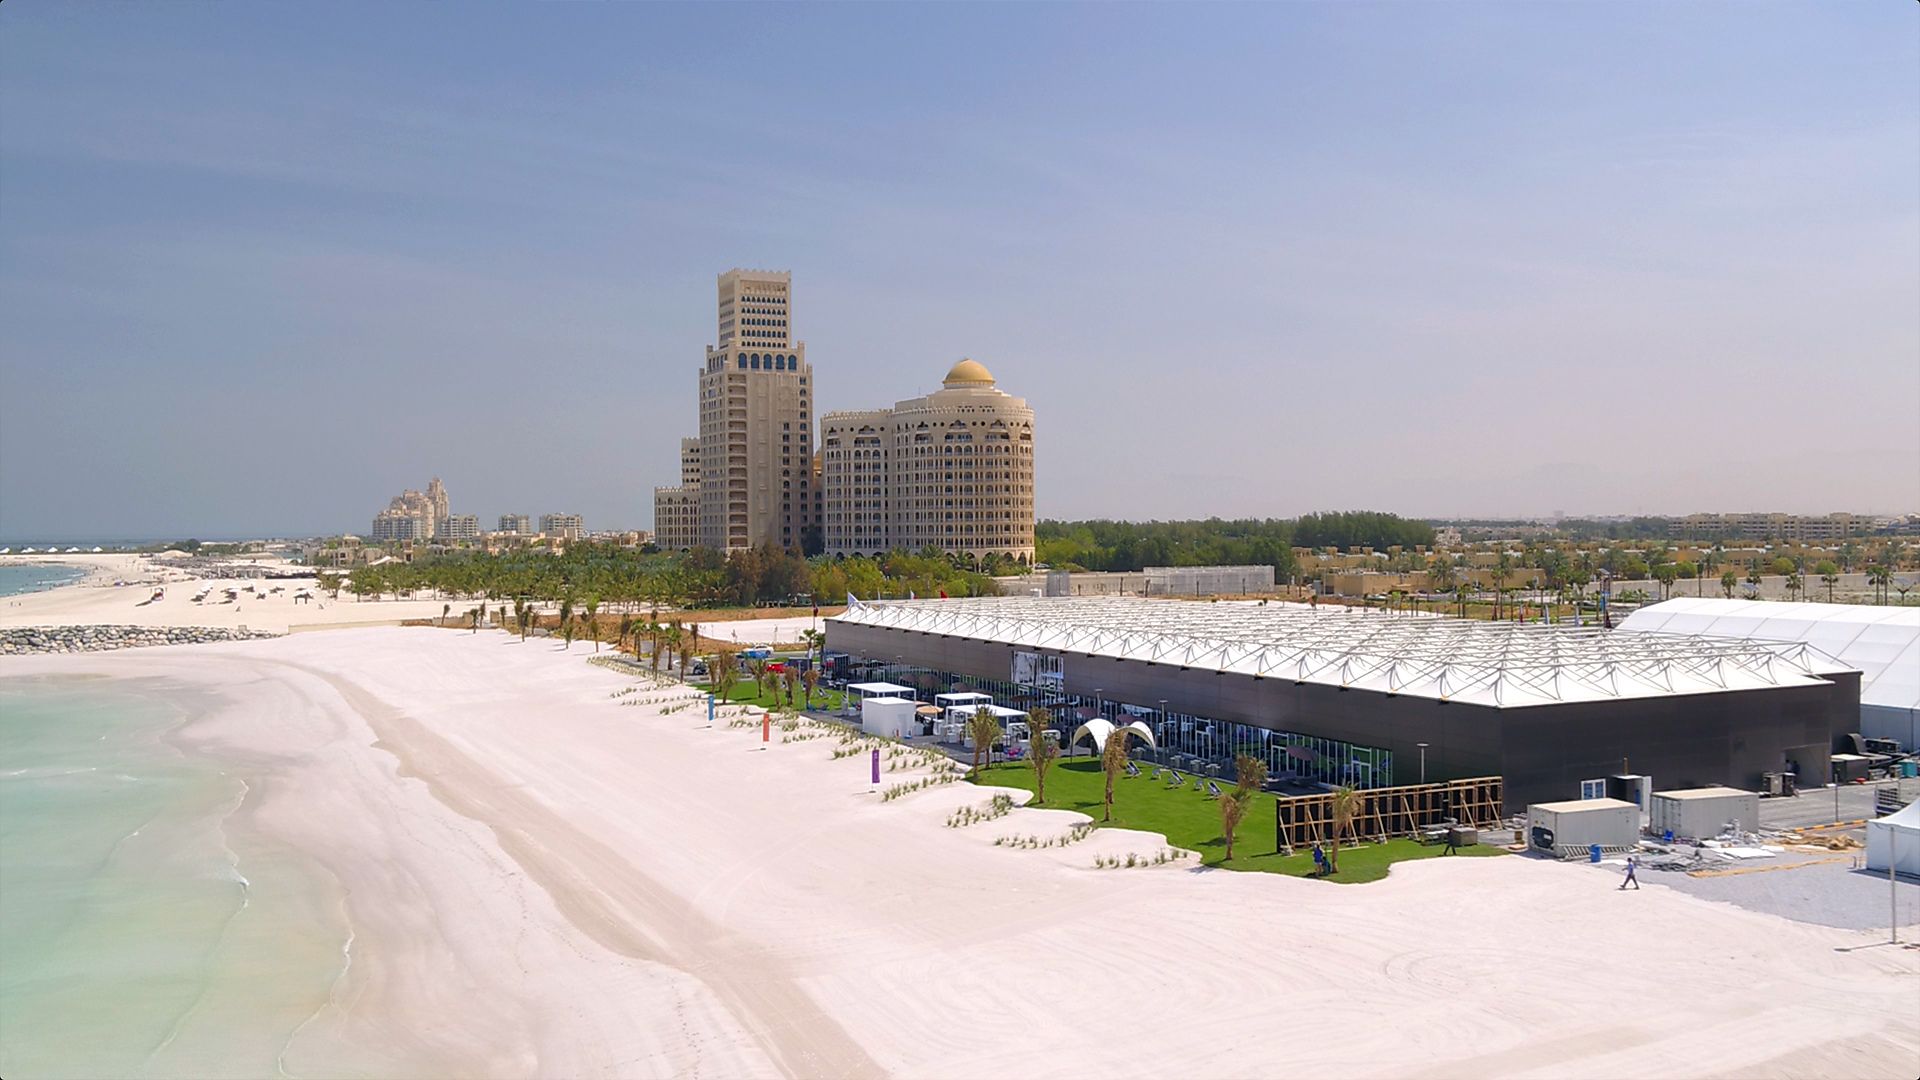 Al Hamra International Exhibition & Convention Center